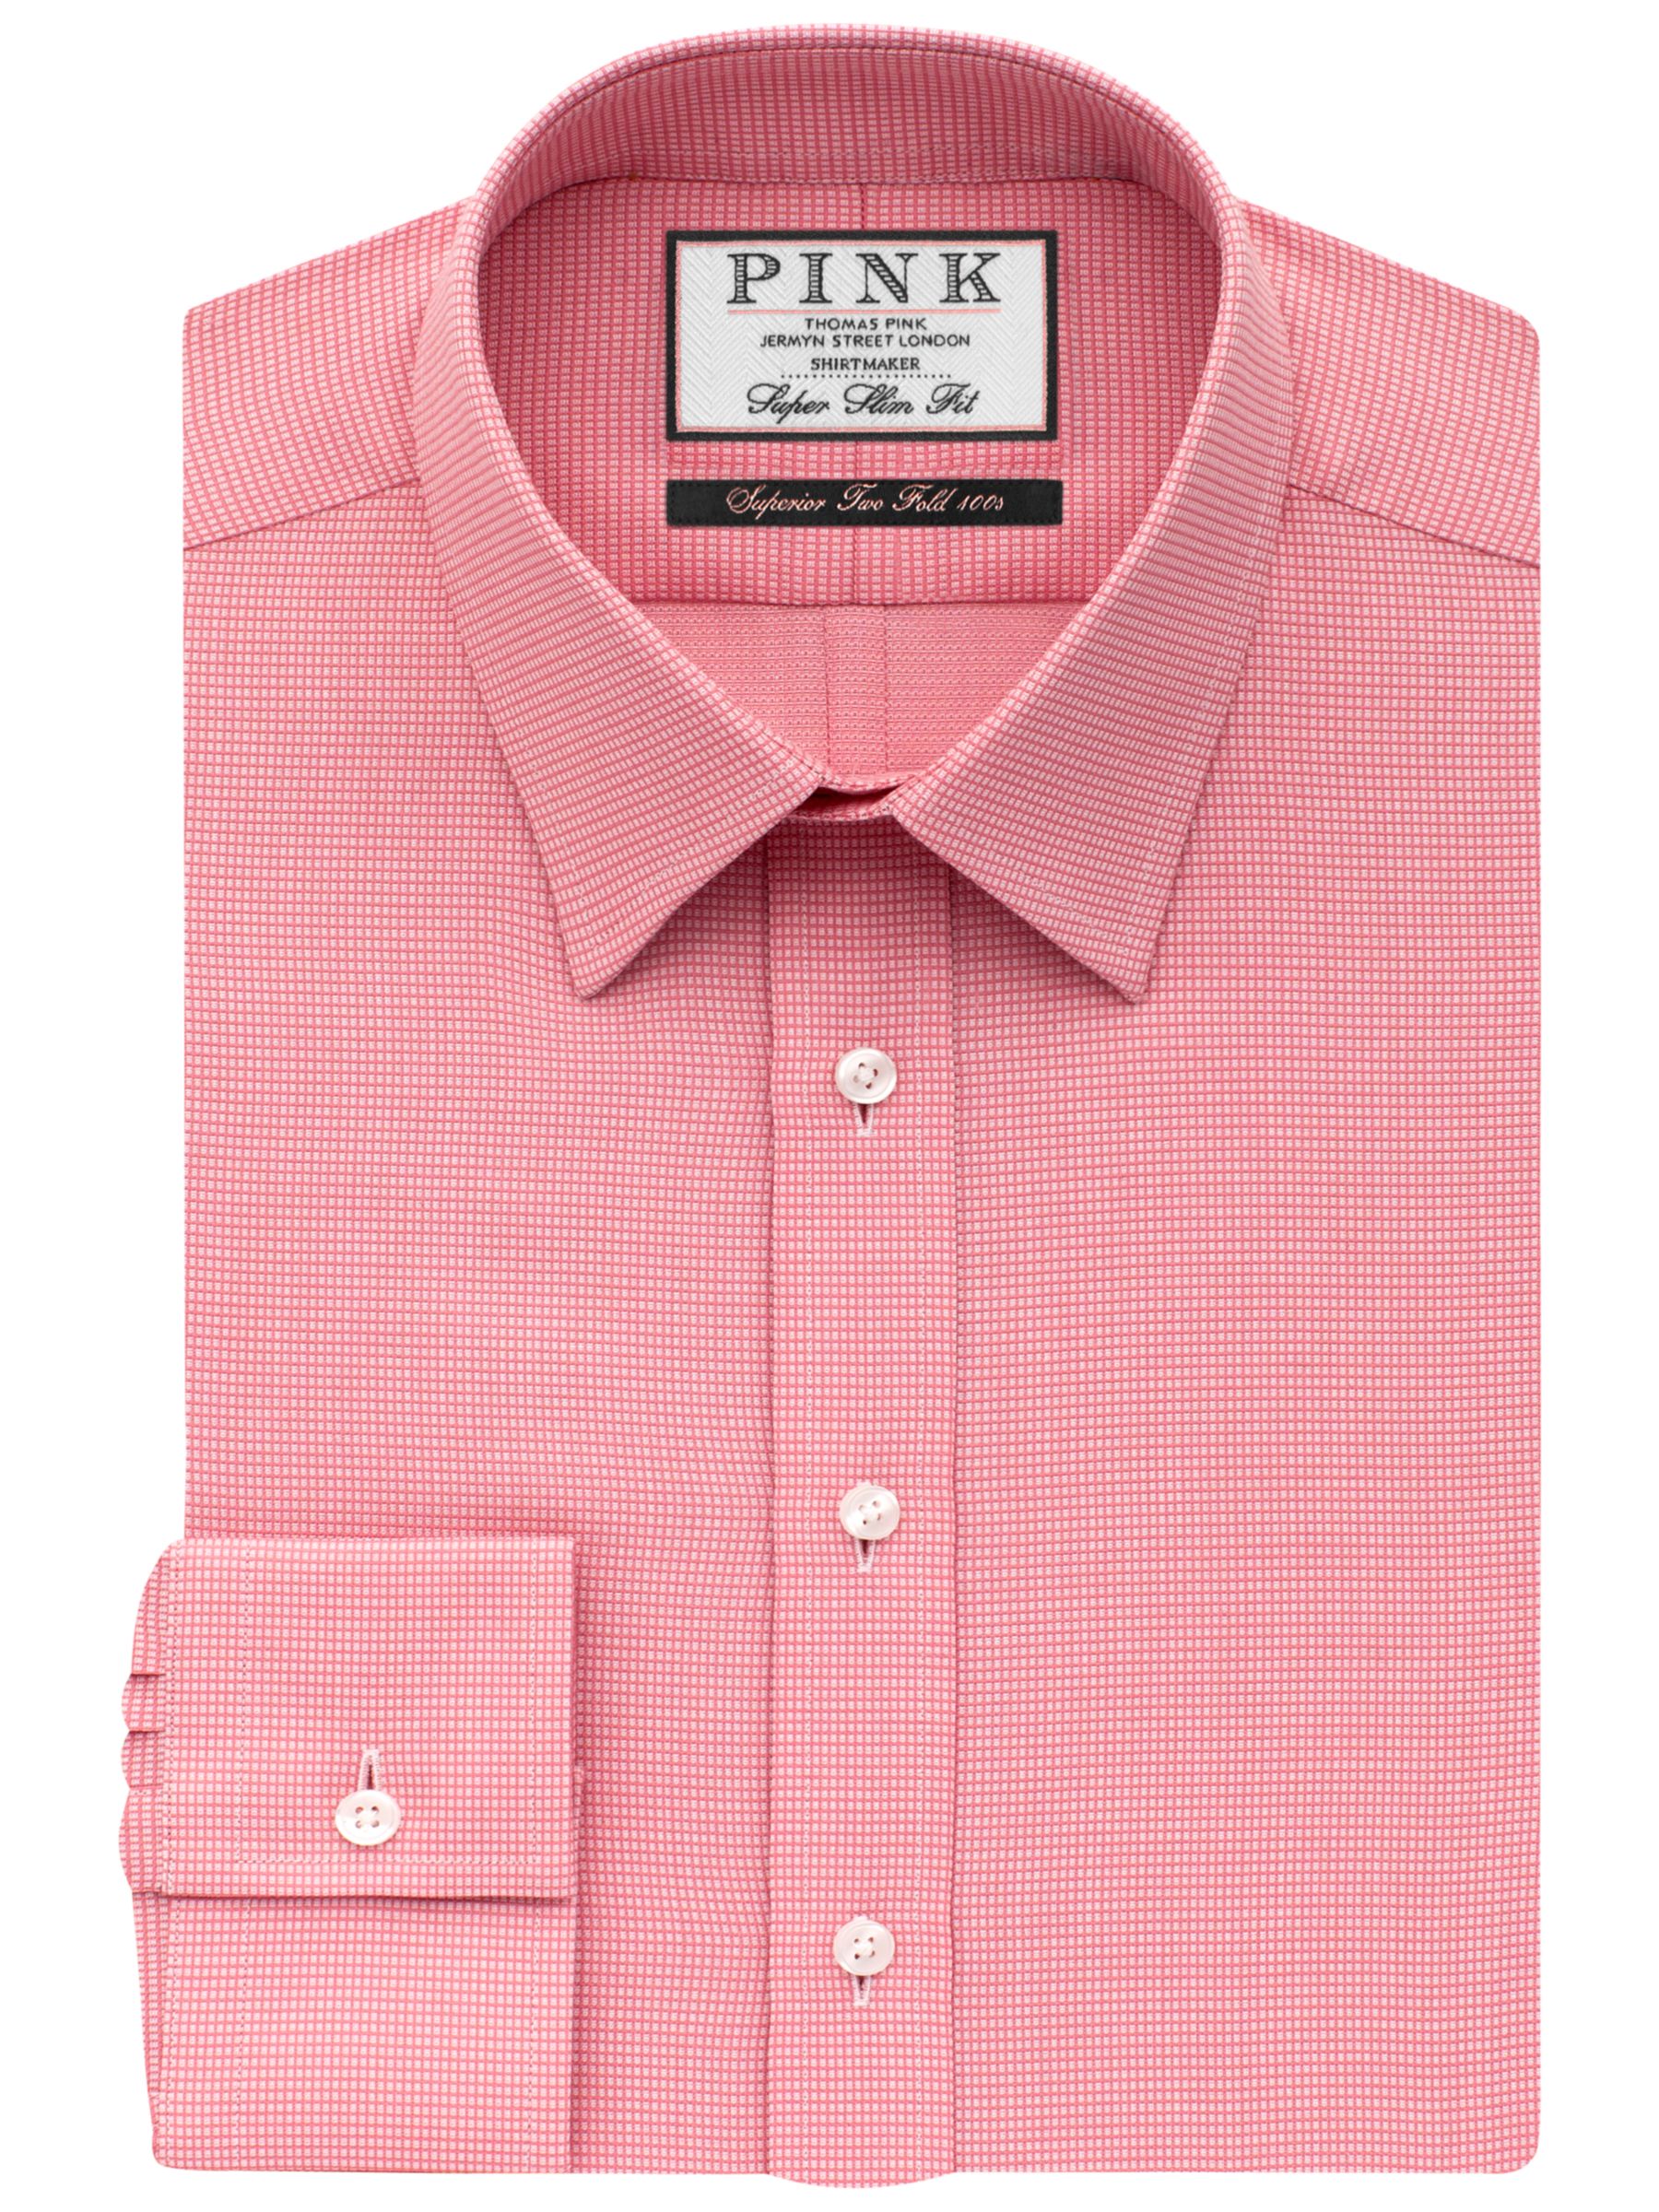 Thomas Pink Hartley Textured Super Slim Fit Shirt, Pink/White, 15